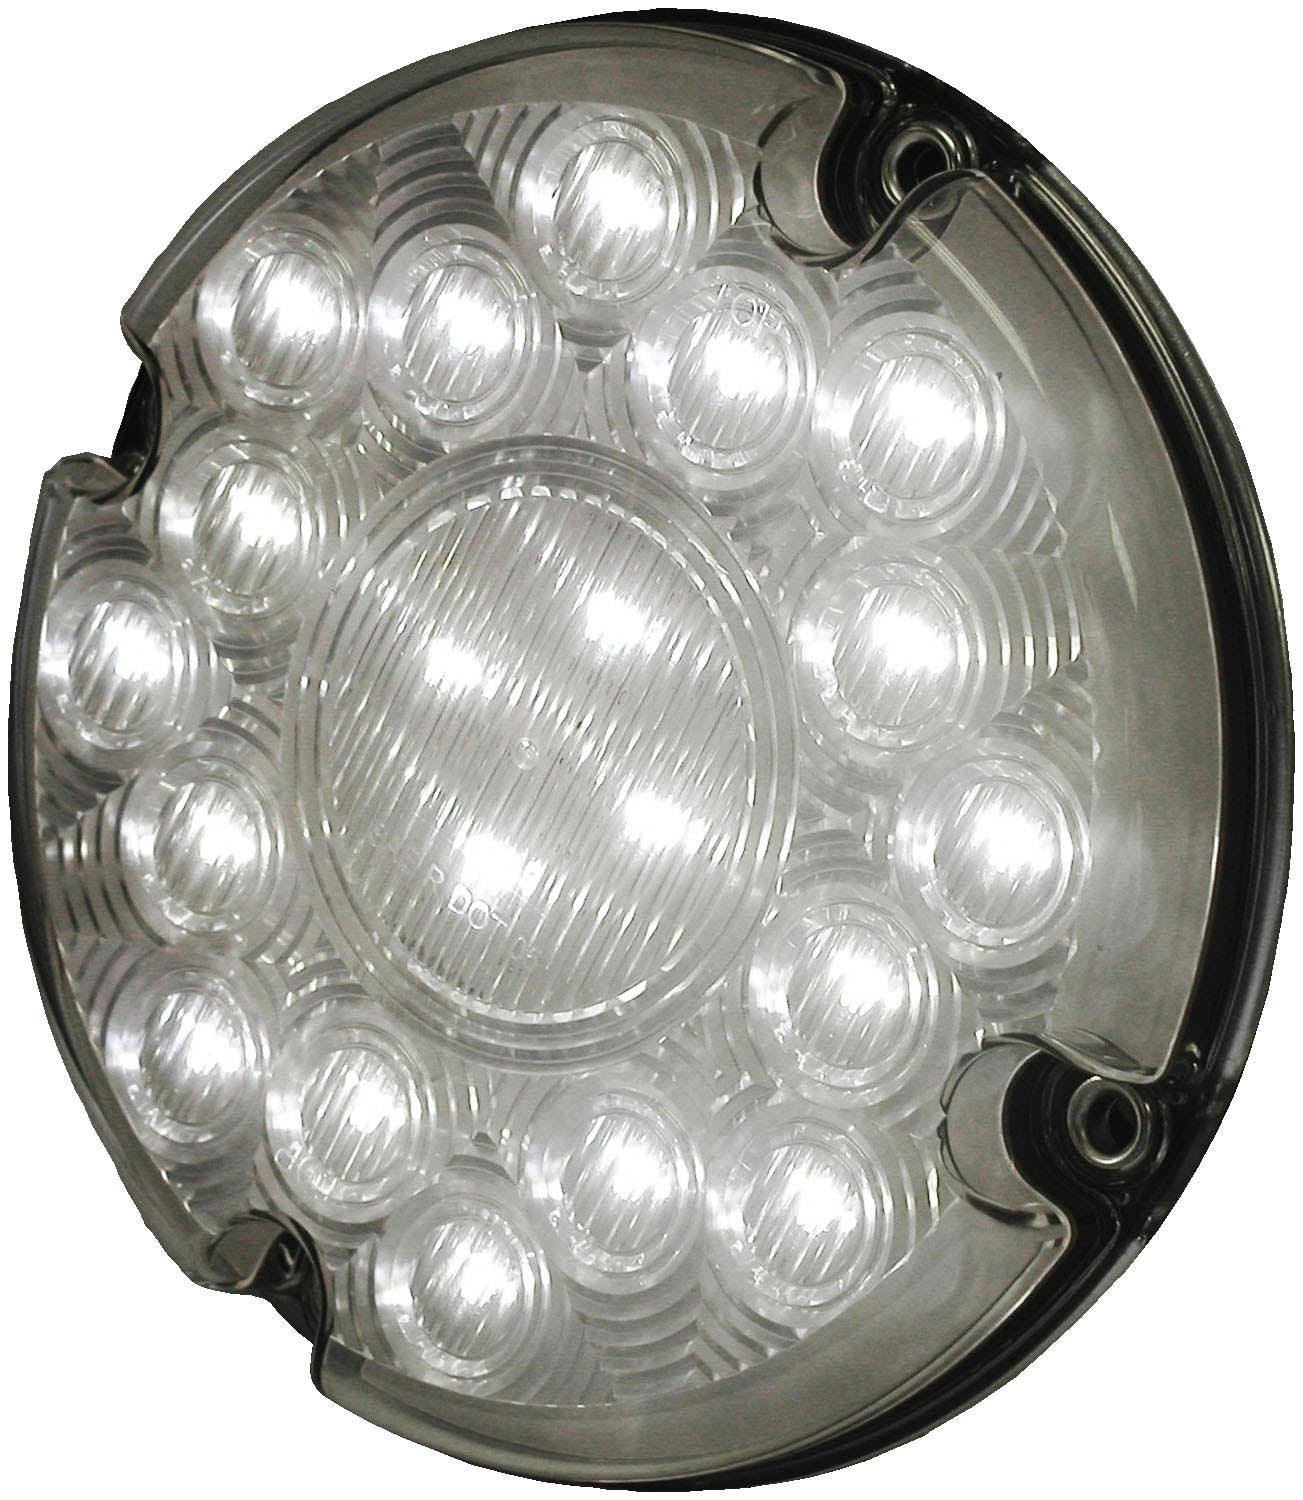 LED Back-Up or Dome Light, 7", white (Pack of 20)